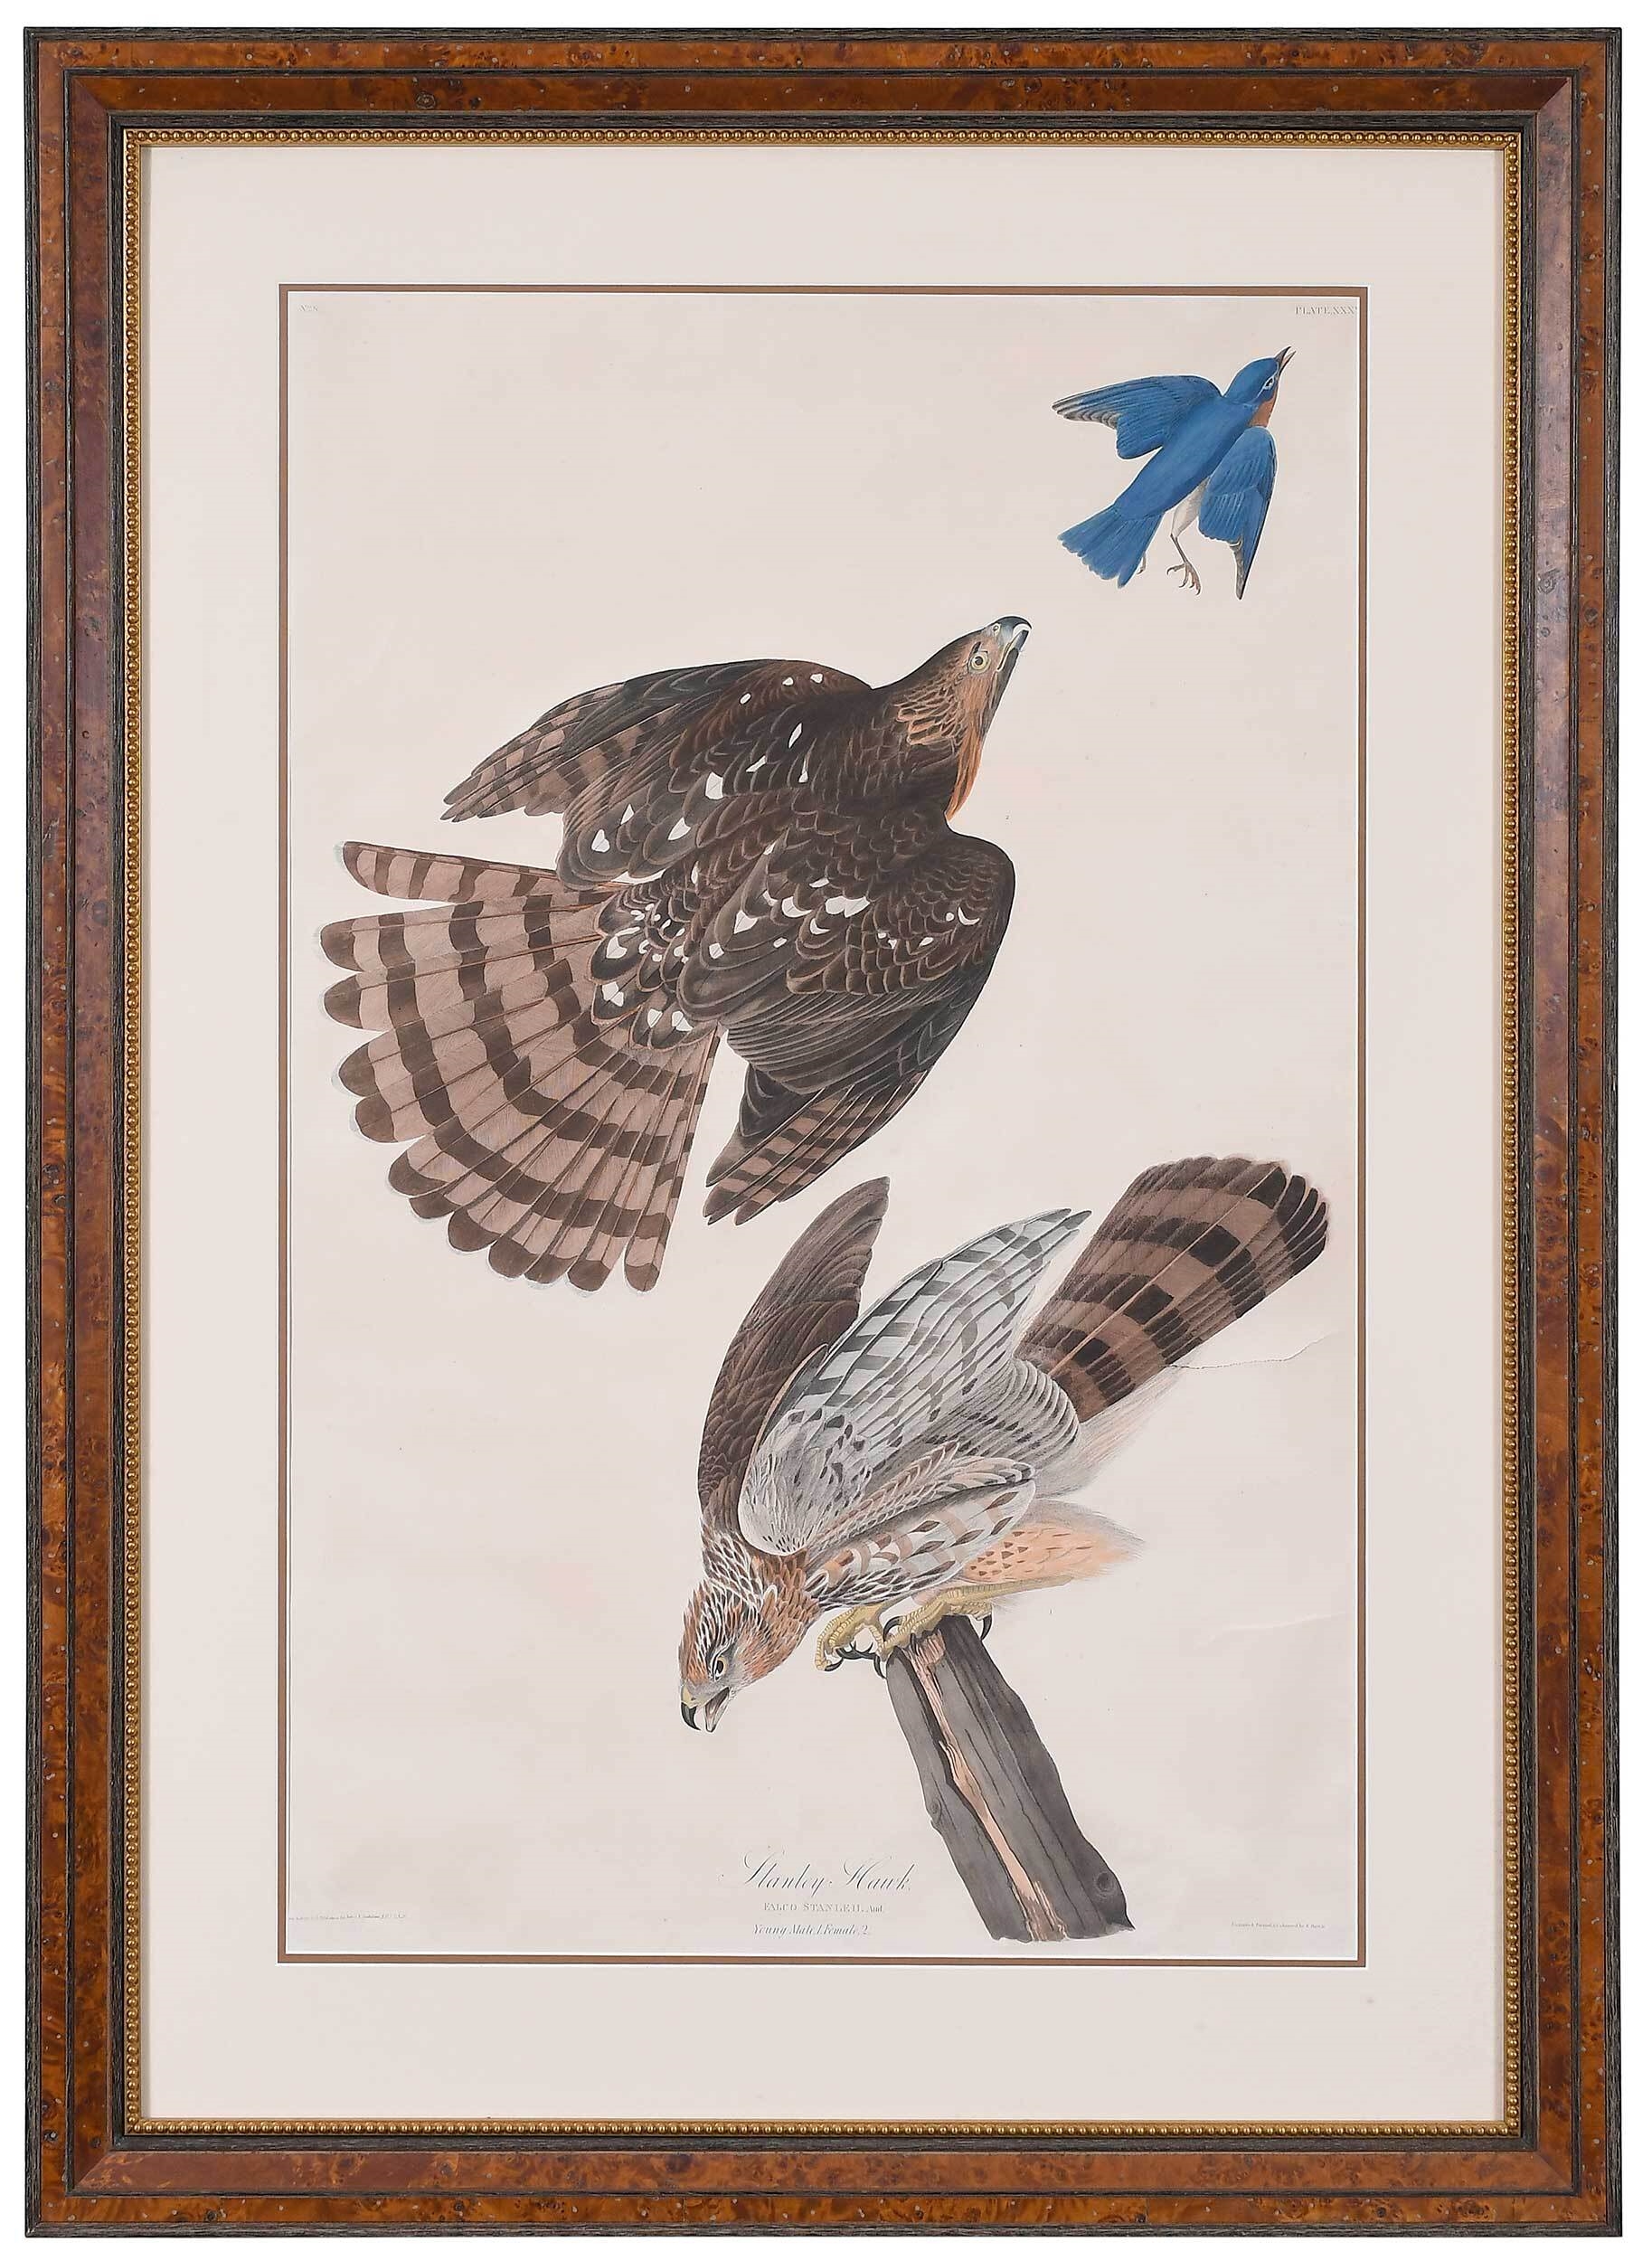 Stanley Hawk by John James Audubon, 1836